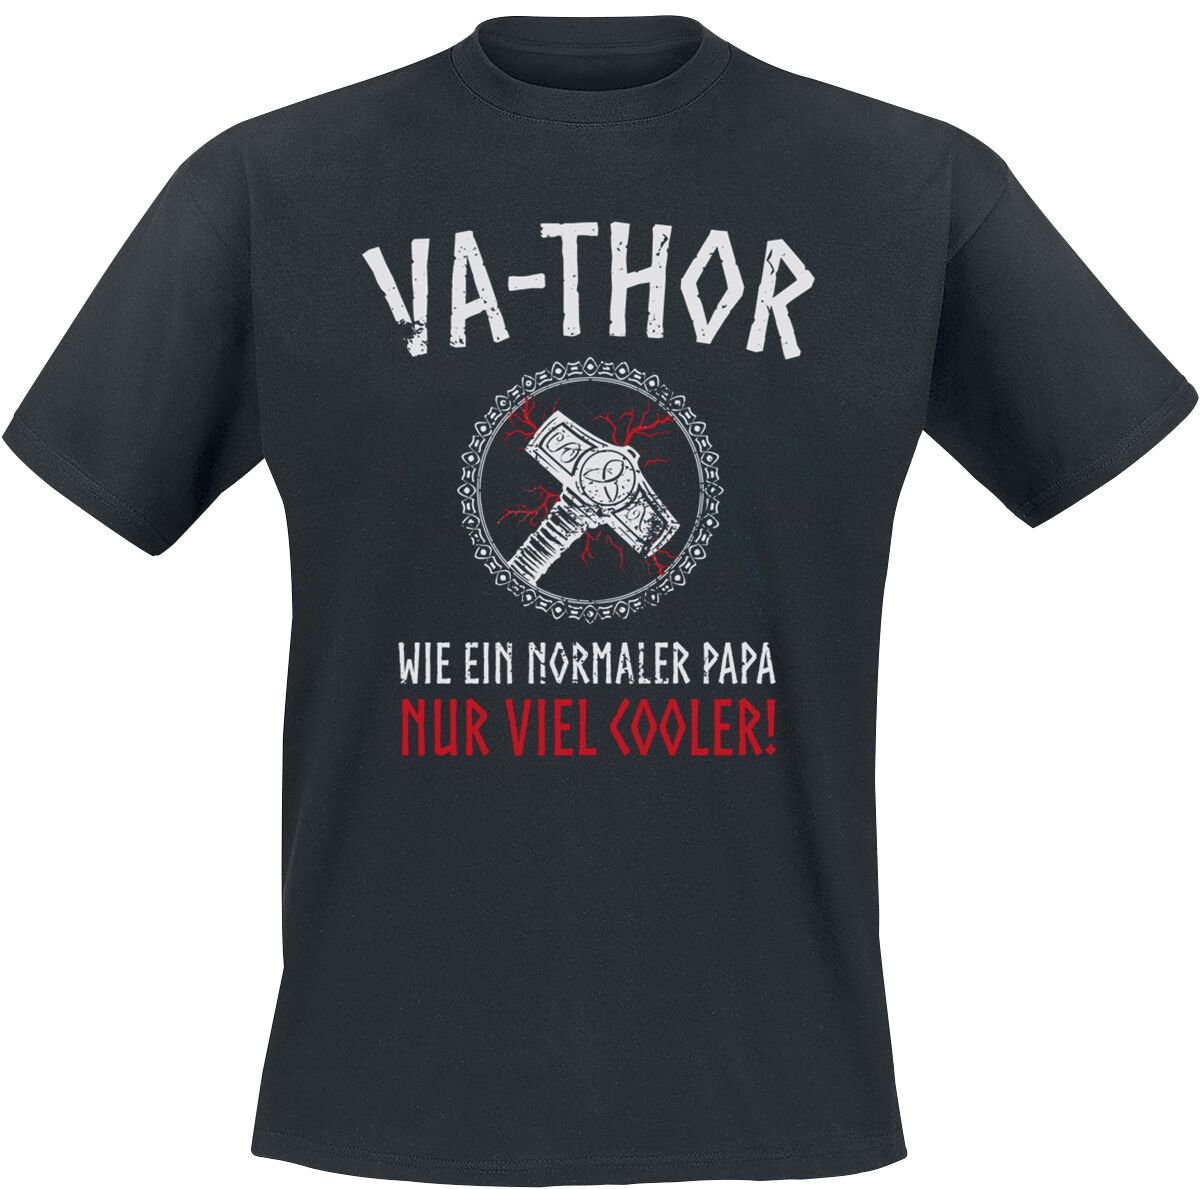 Familie & Freunde Va-Thor T-Shirt schwarz in S